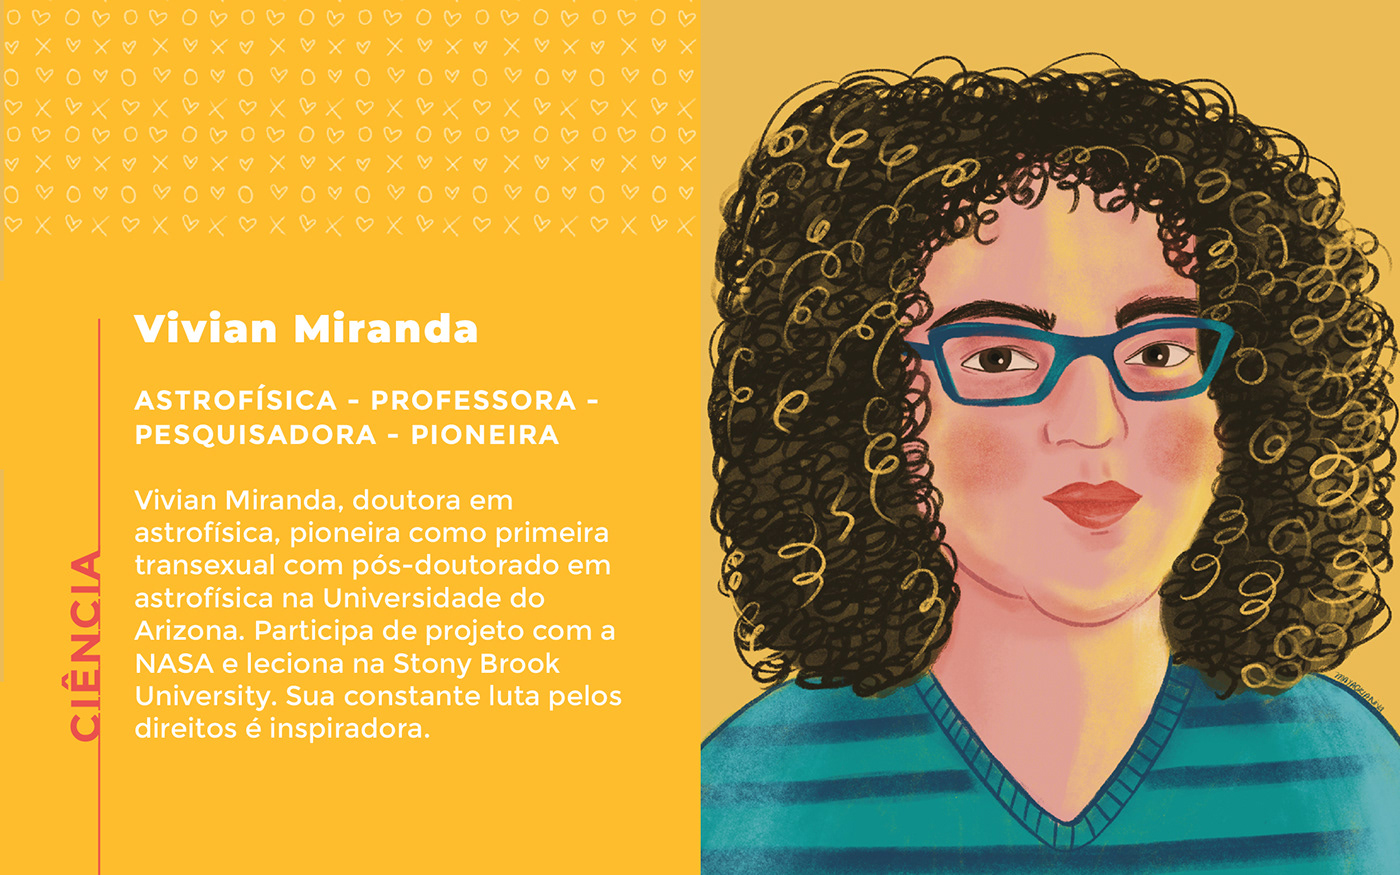 An illustrated portrait of Vivian Miranda, a brazilian transgender astrophysicist and researcher.